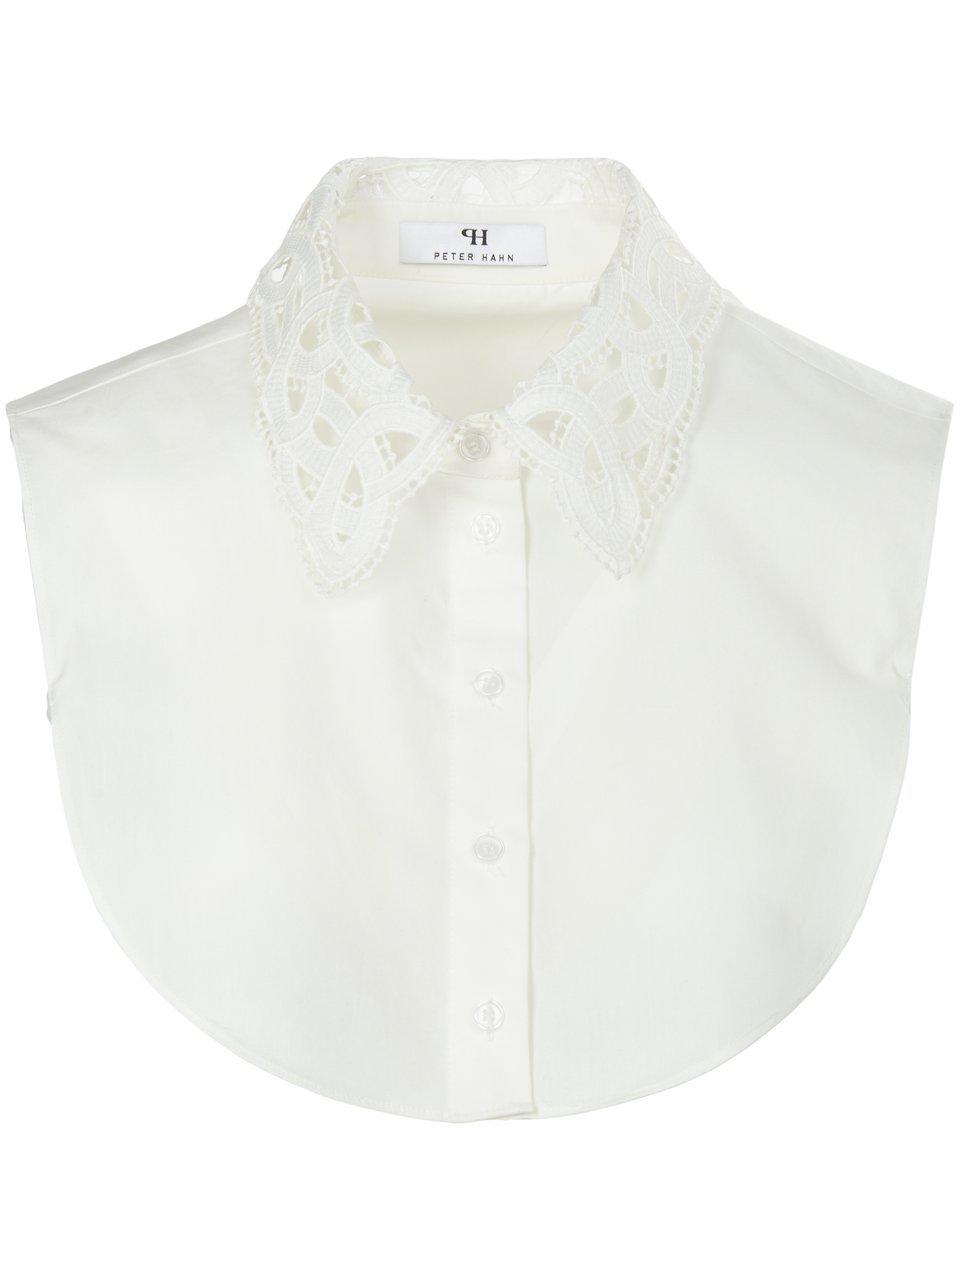 Image of False collar in 100% cotton Peter Hahn white